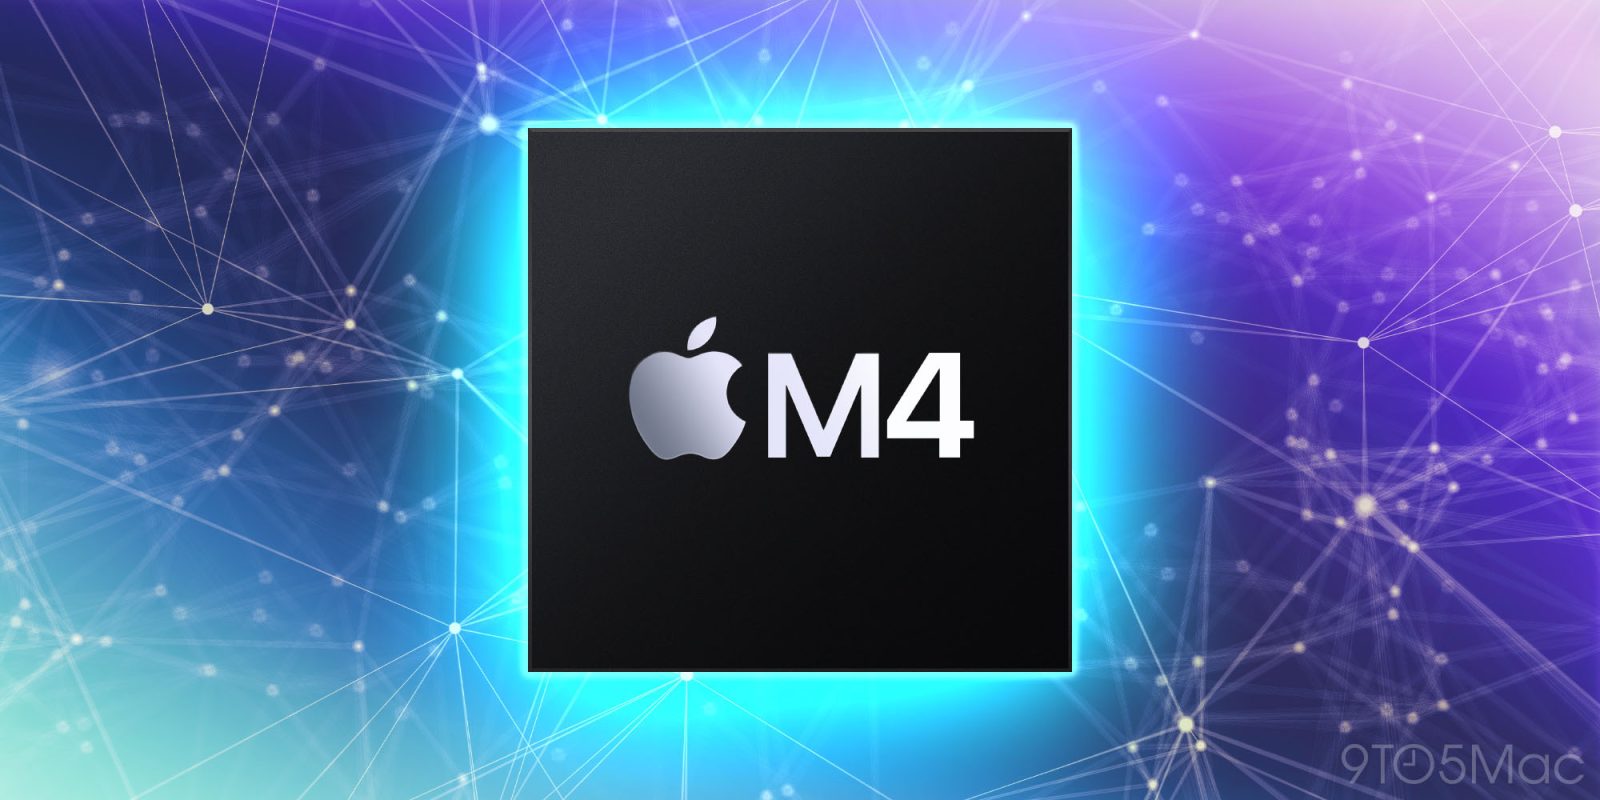 Apple M4 chip AI